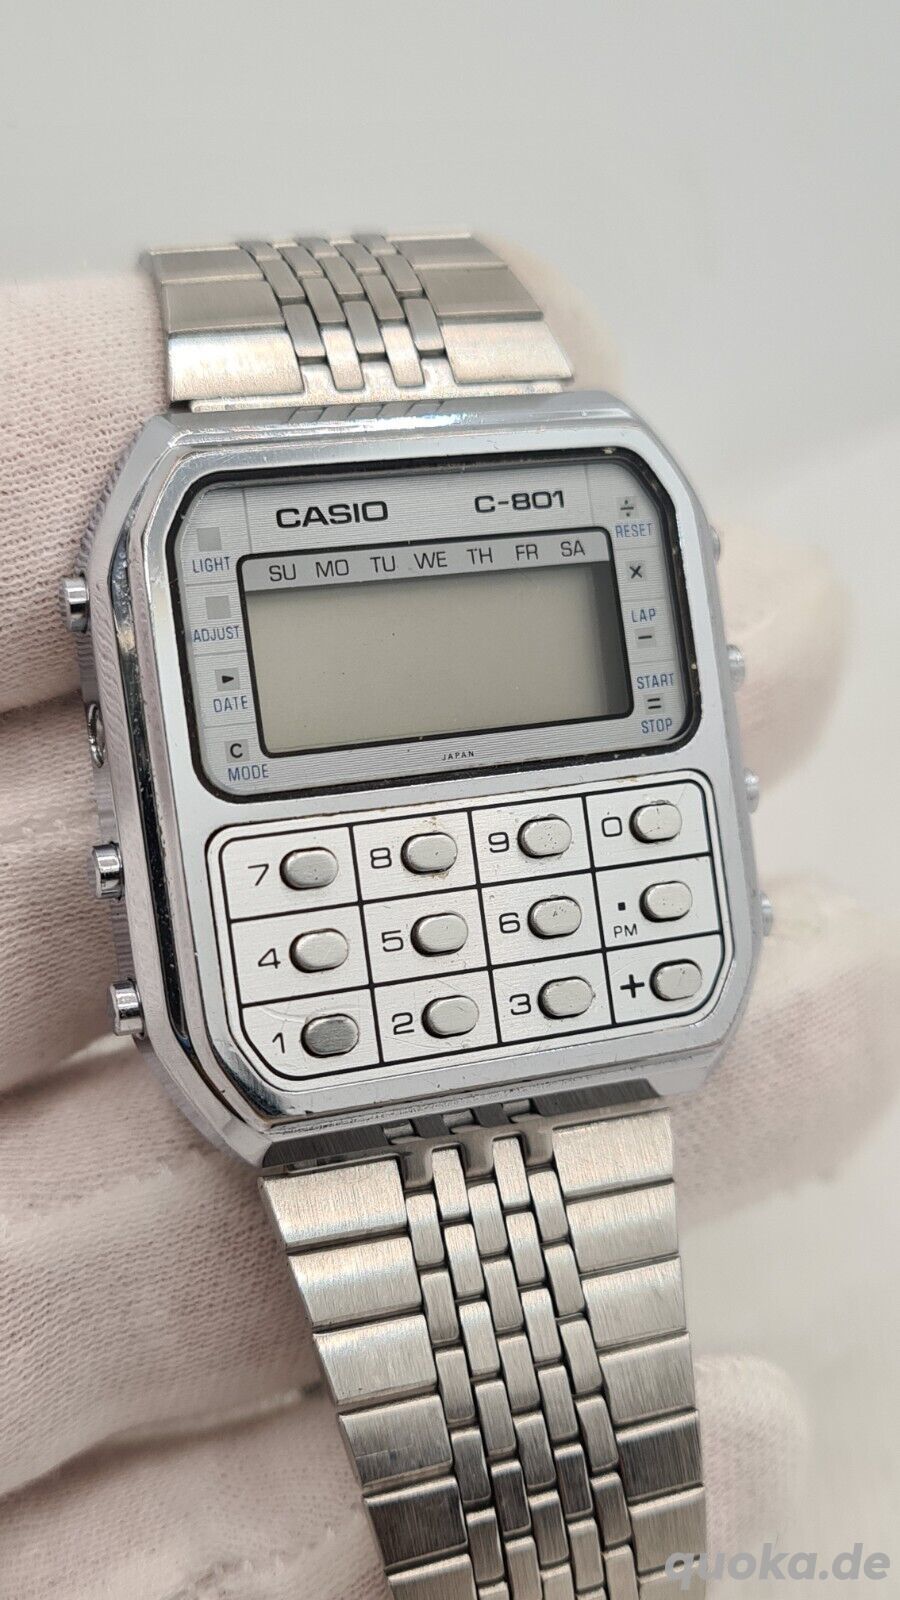  Casio C-801 Vintage Calculator LCD Watch Japan REPAIR or SPARE PARTS